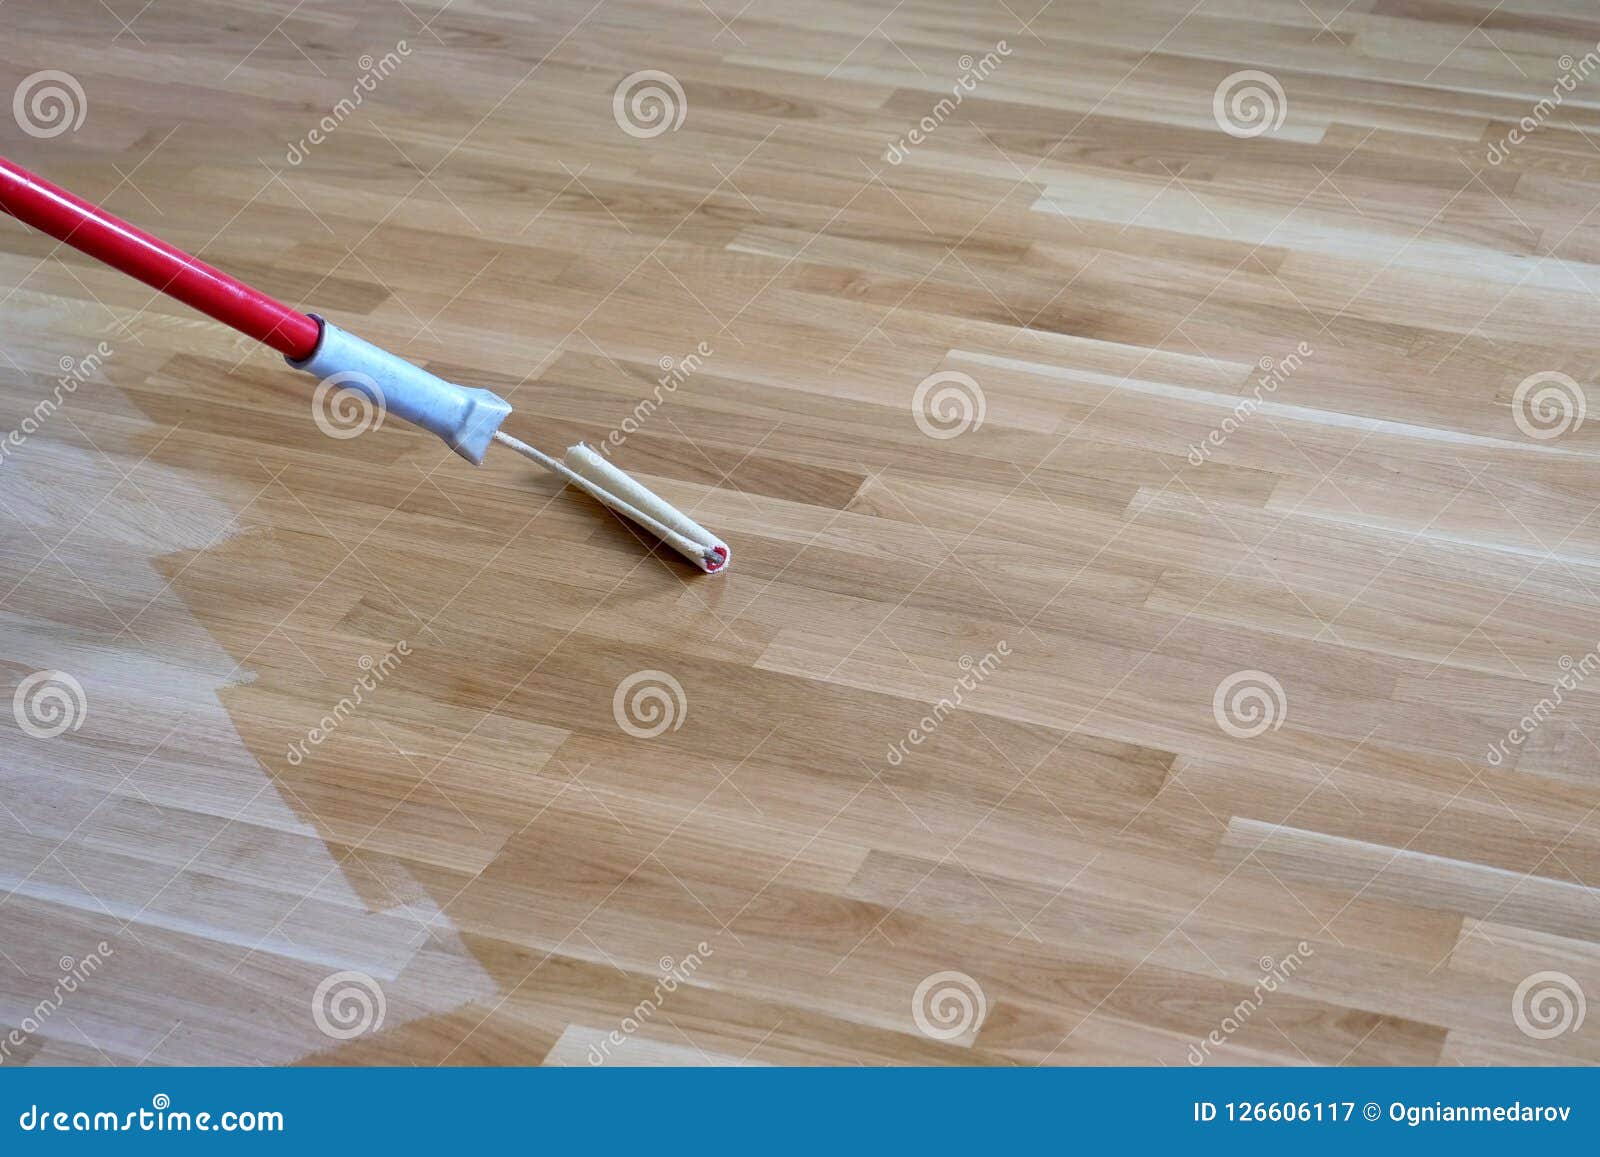 Varnishing Lacquering Parquet Floor Stock Image Image Of Floor